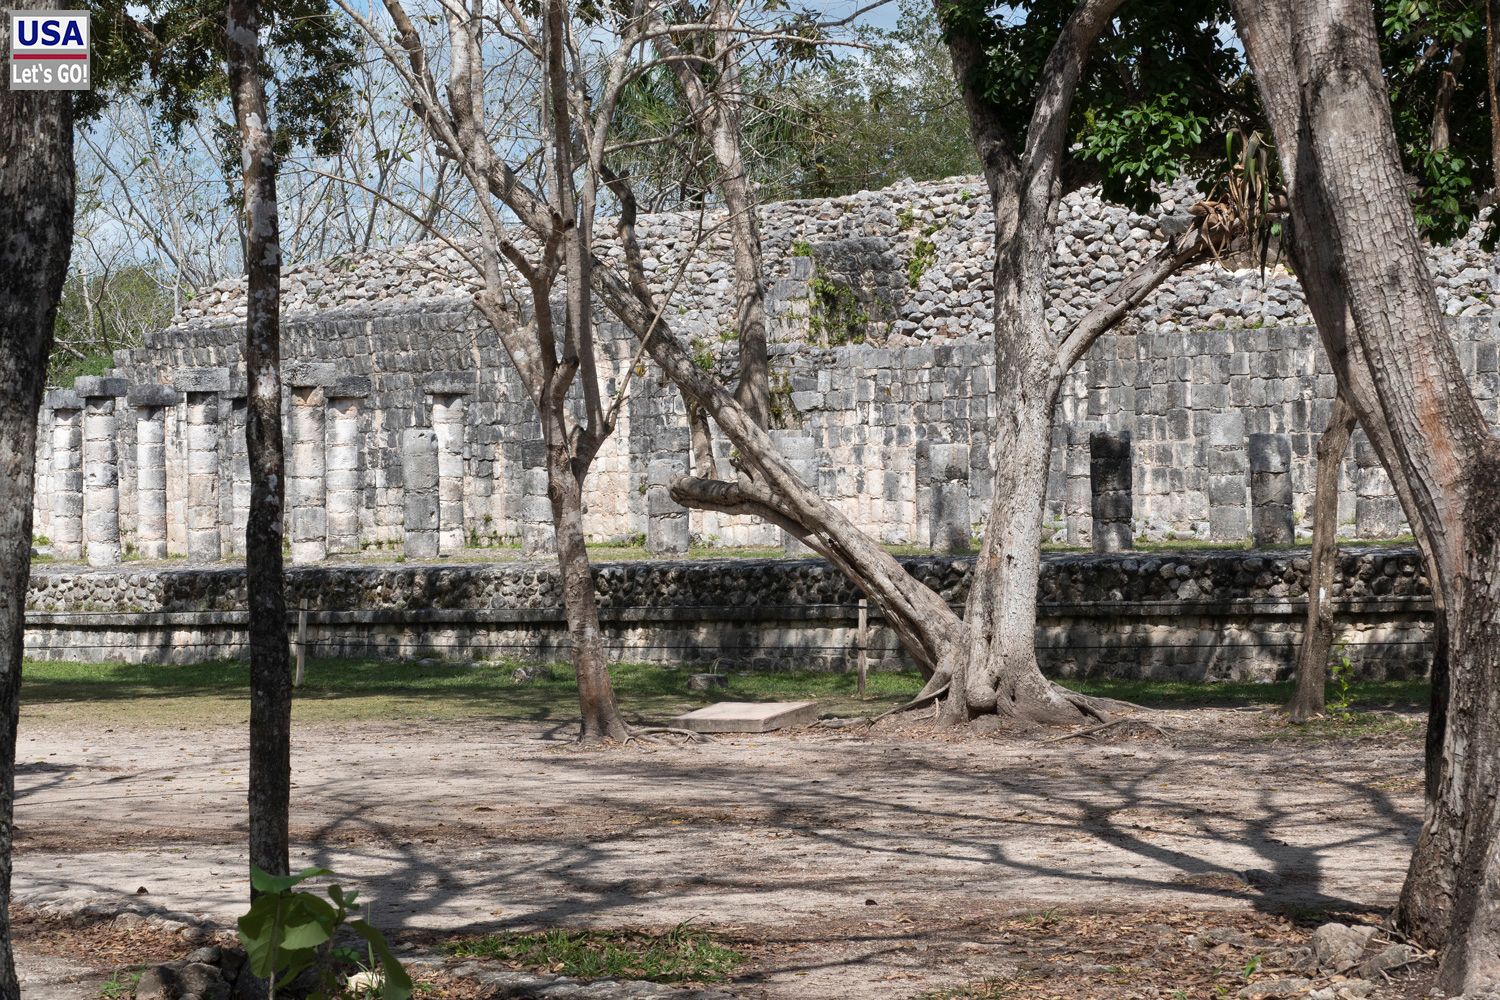 Chichén Itzá Las Mil Columnas